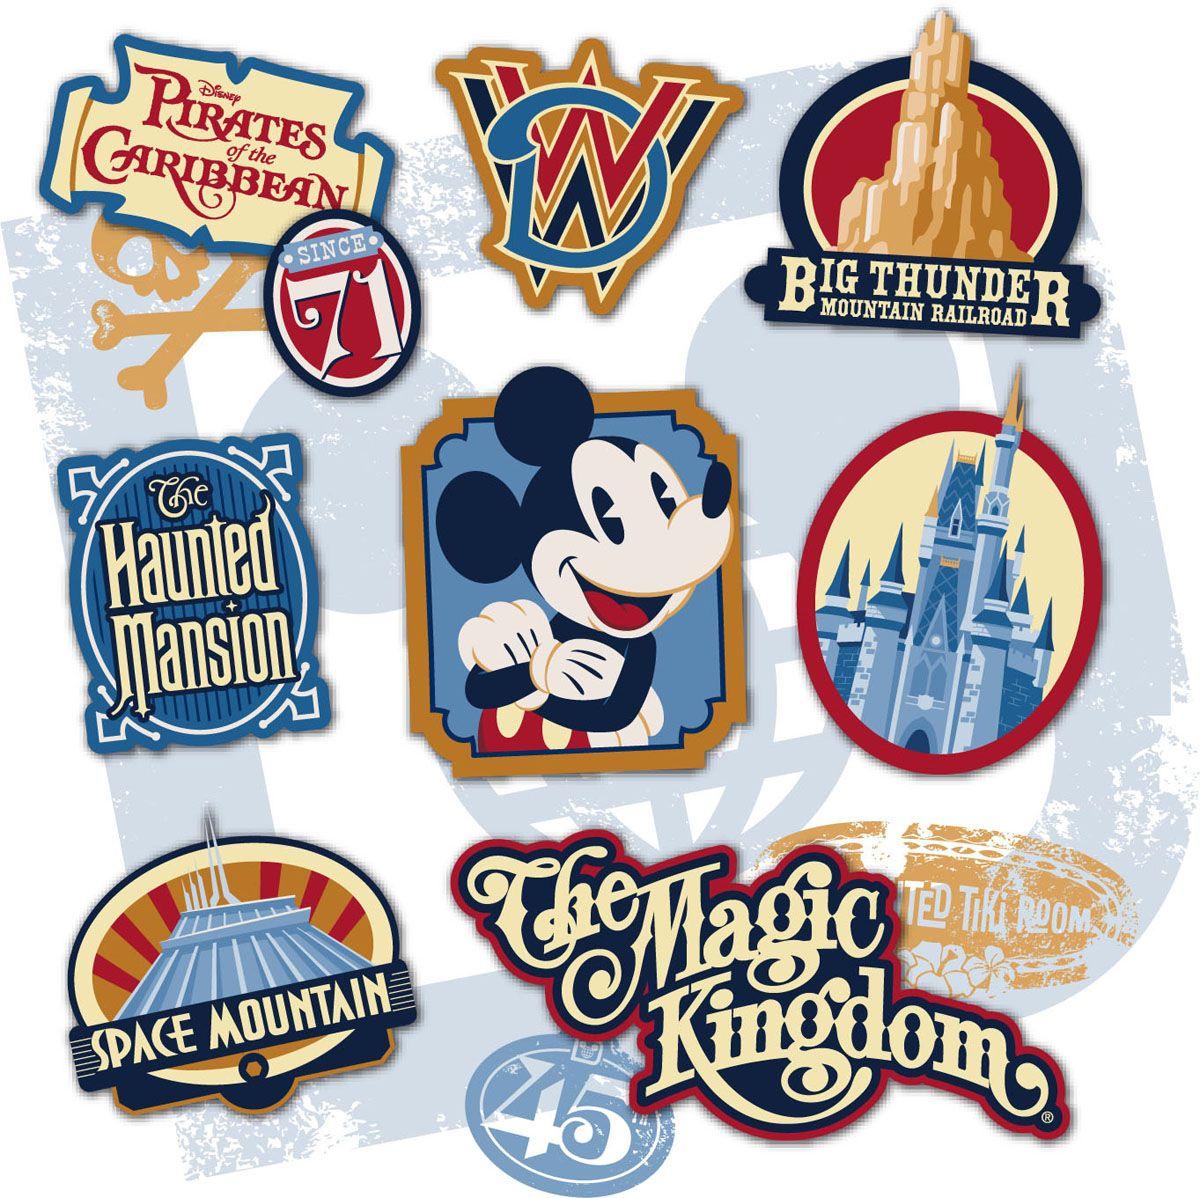 Disney World Park Logo - First Look at Magic Kingdom 45th Anniversary Merchandise Artwork ...